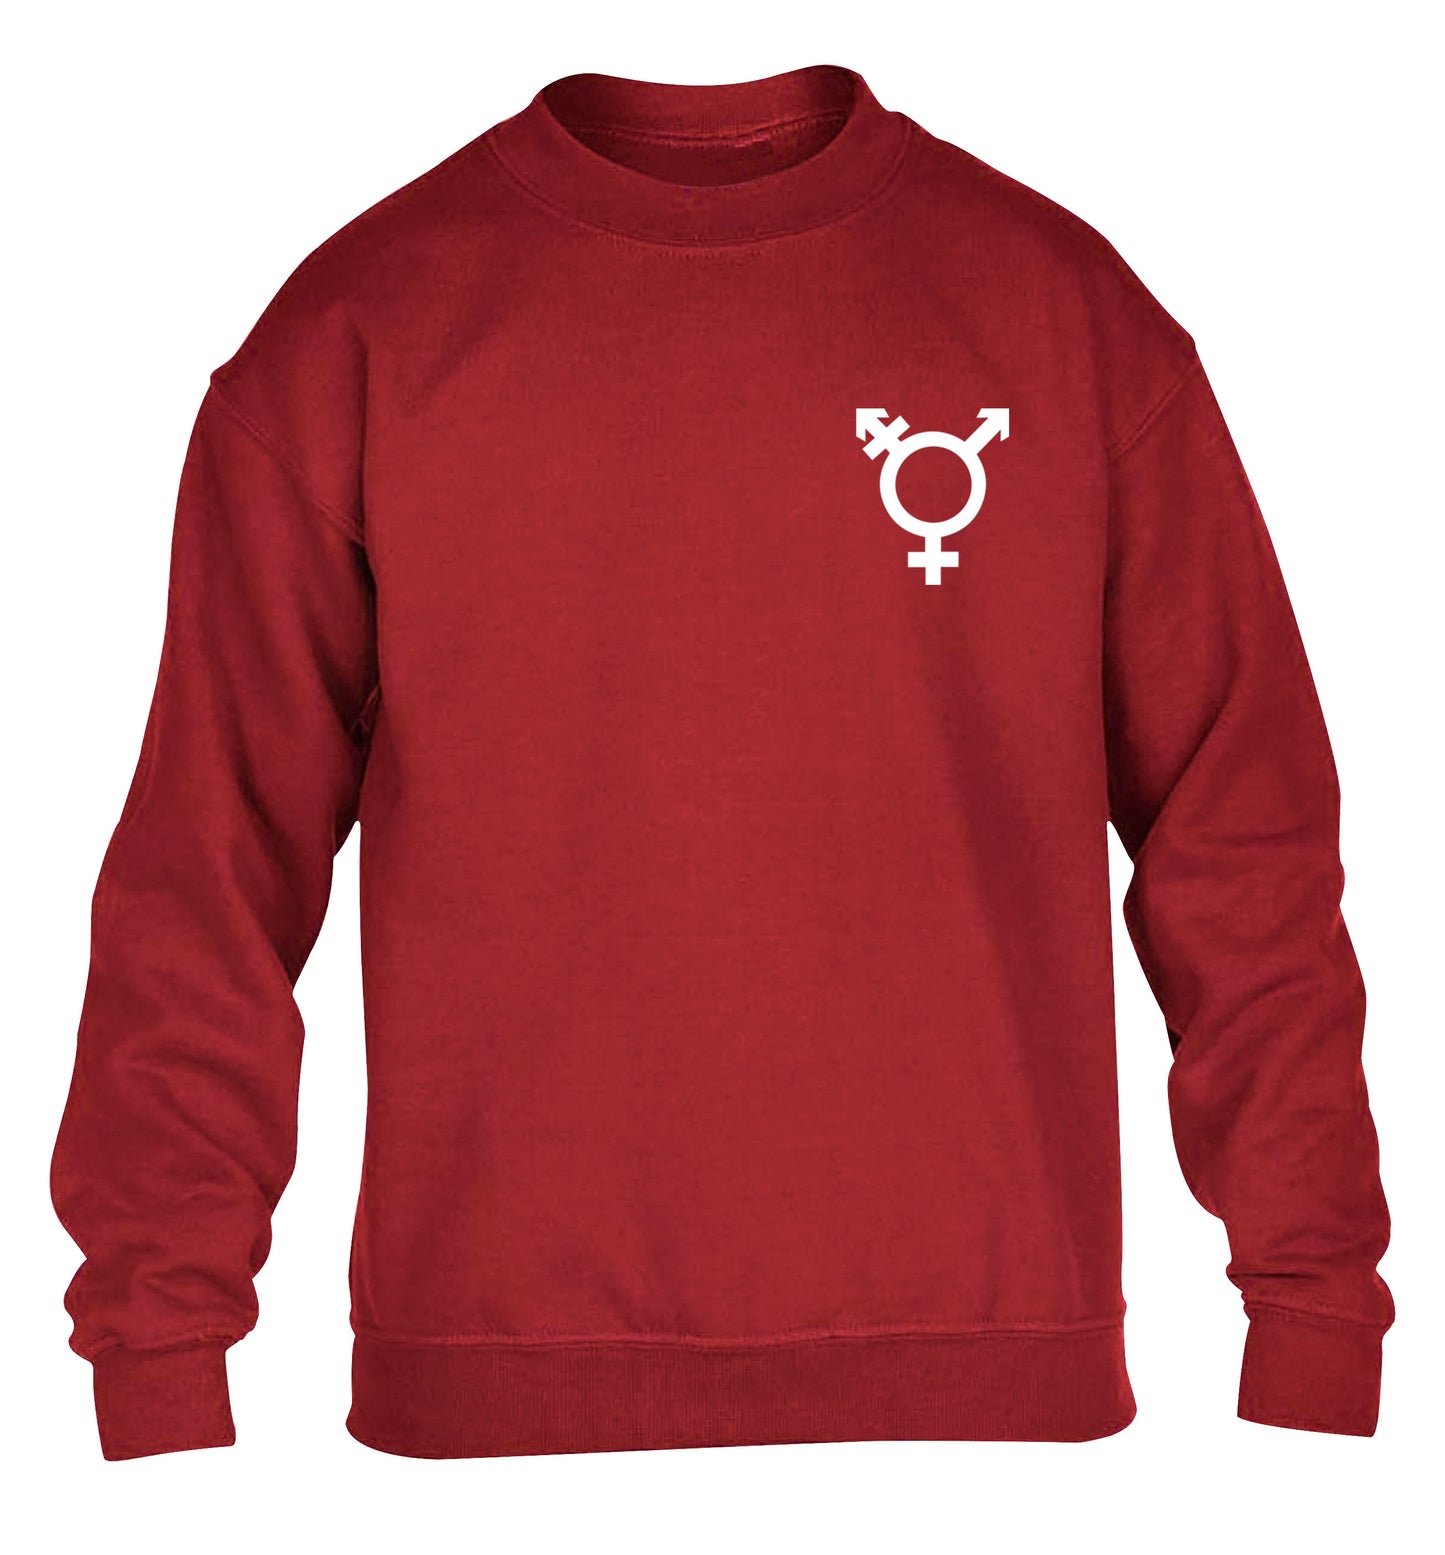 Trans gender symbol pocket children's grey sweater 12-14 Years